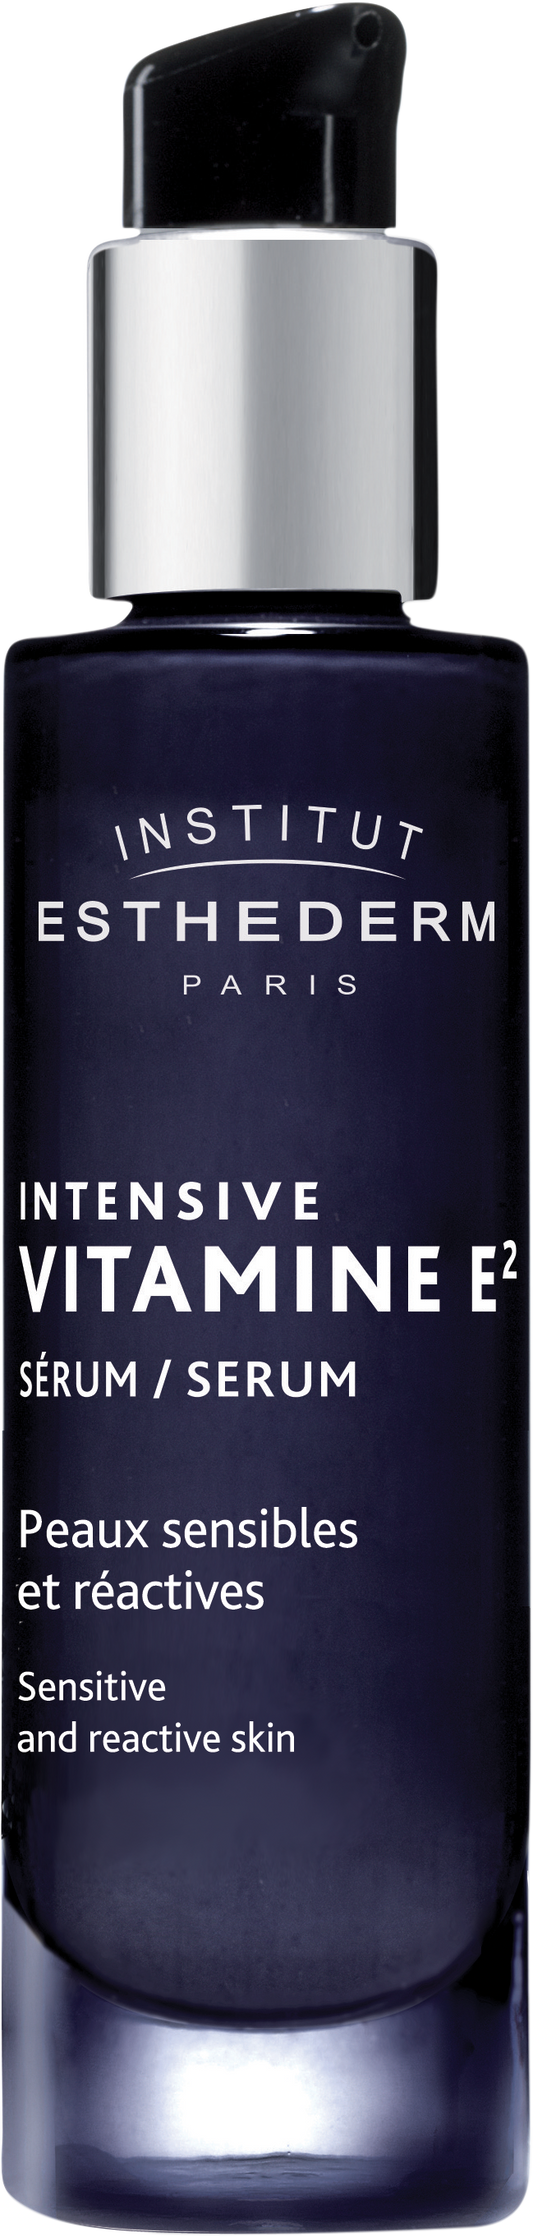 Intensive Vitamine E - Sérum